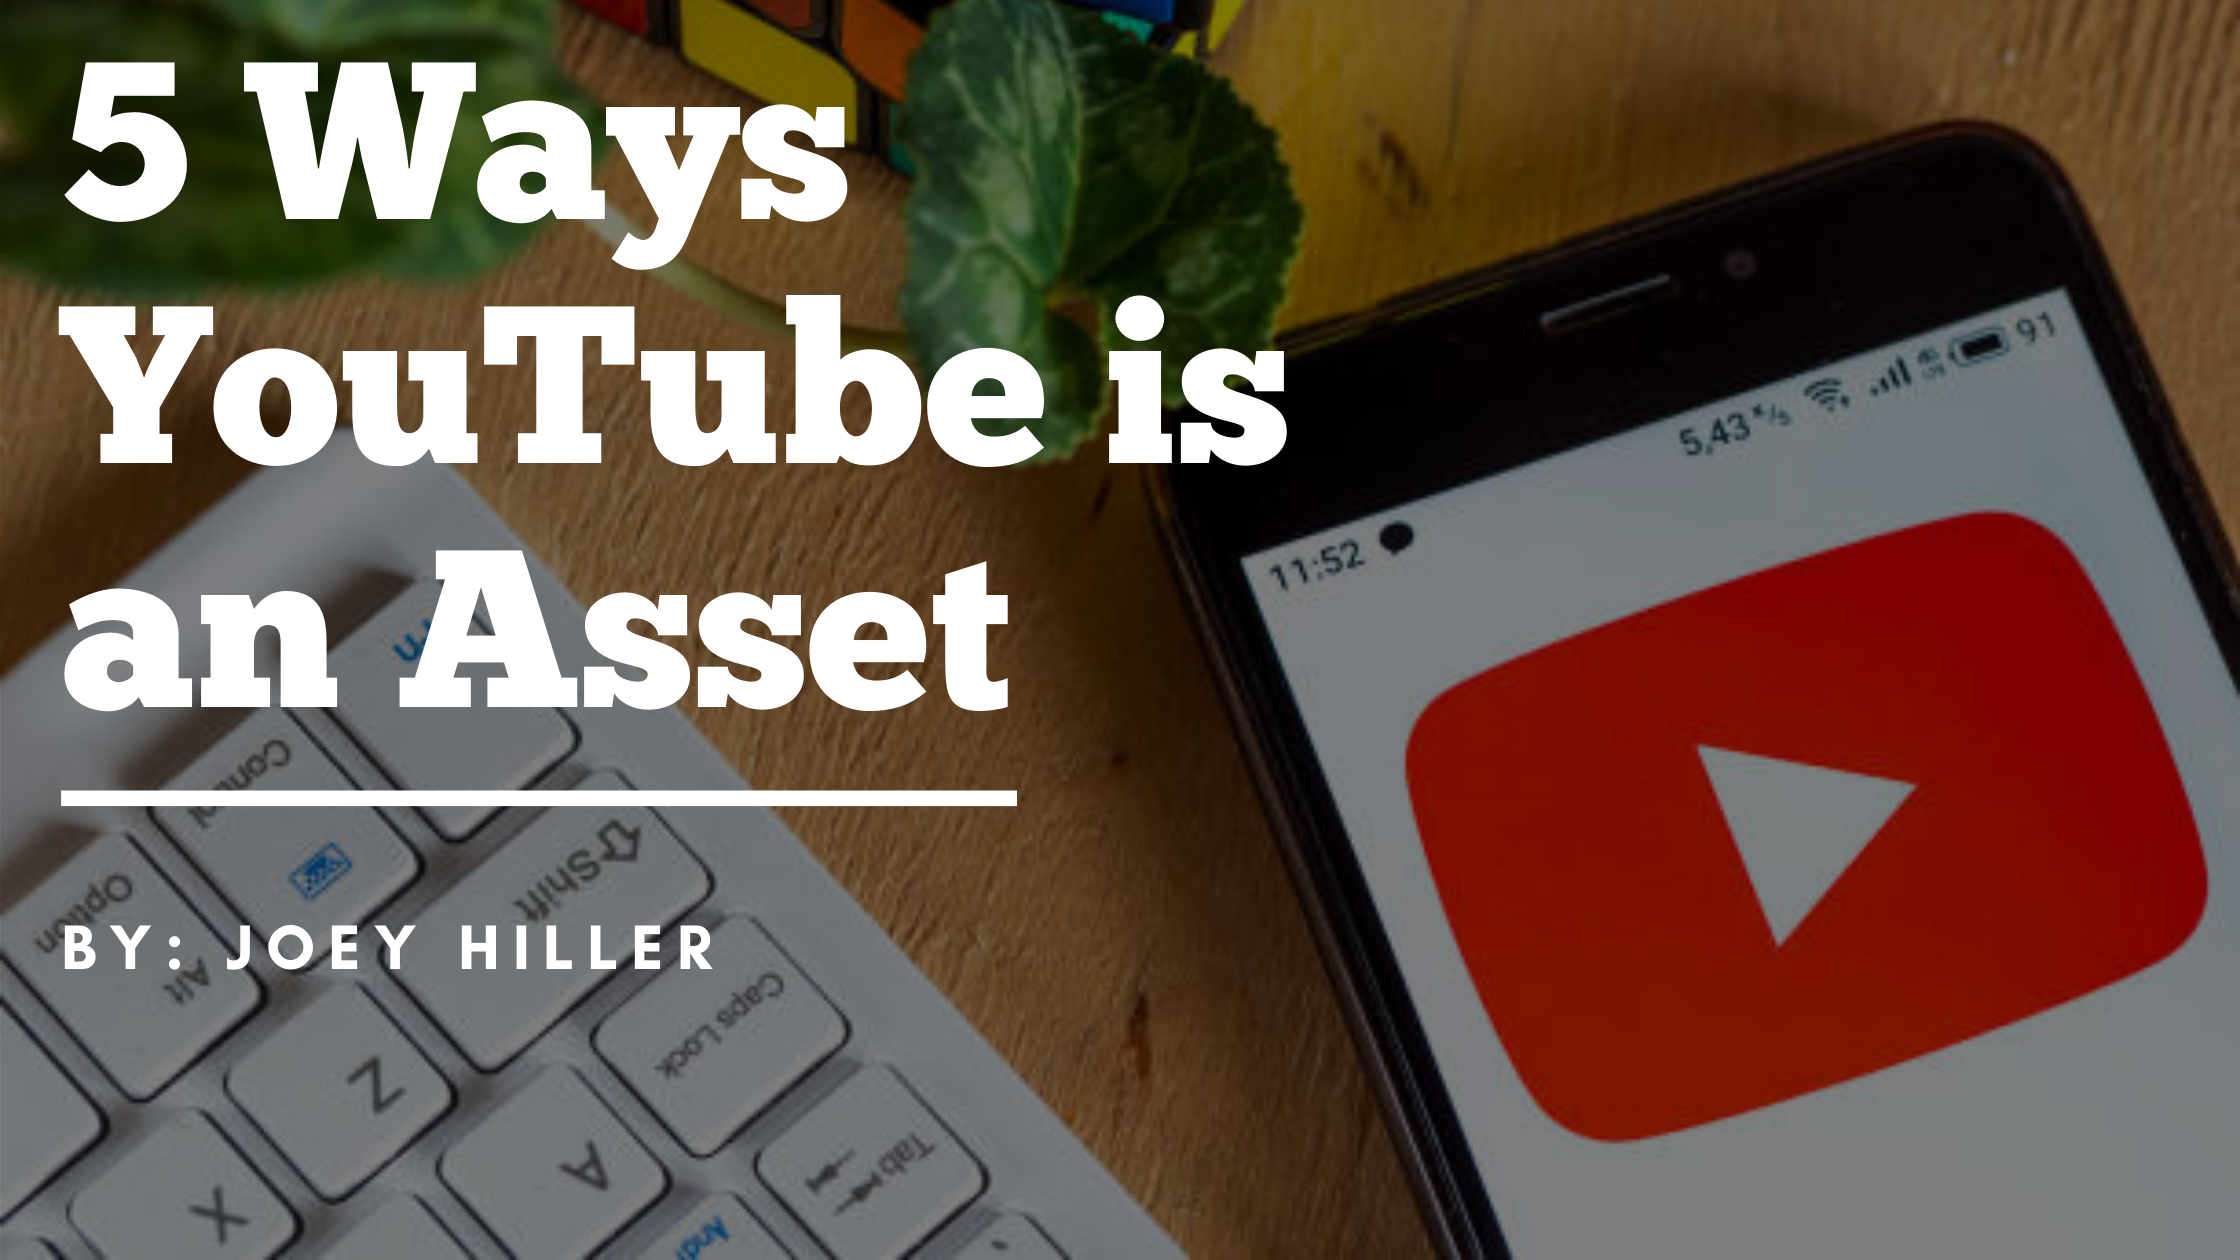 5 Ways YouTube is an Asset